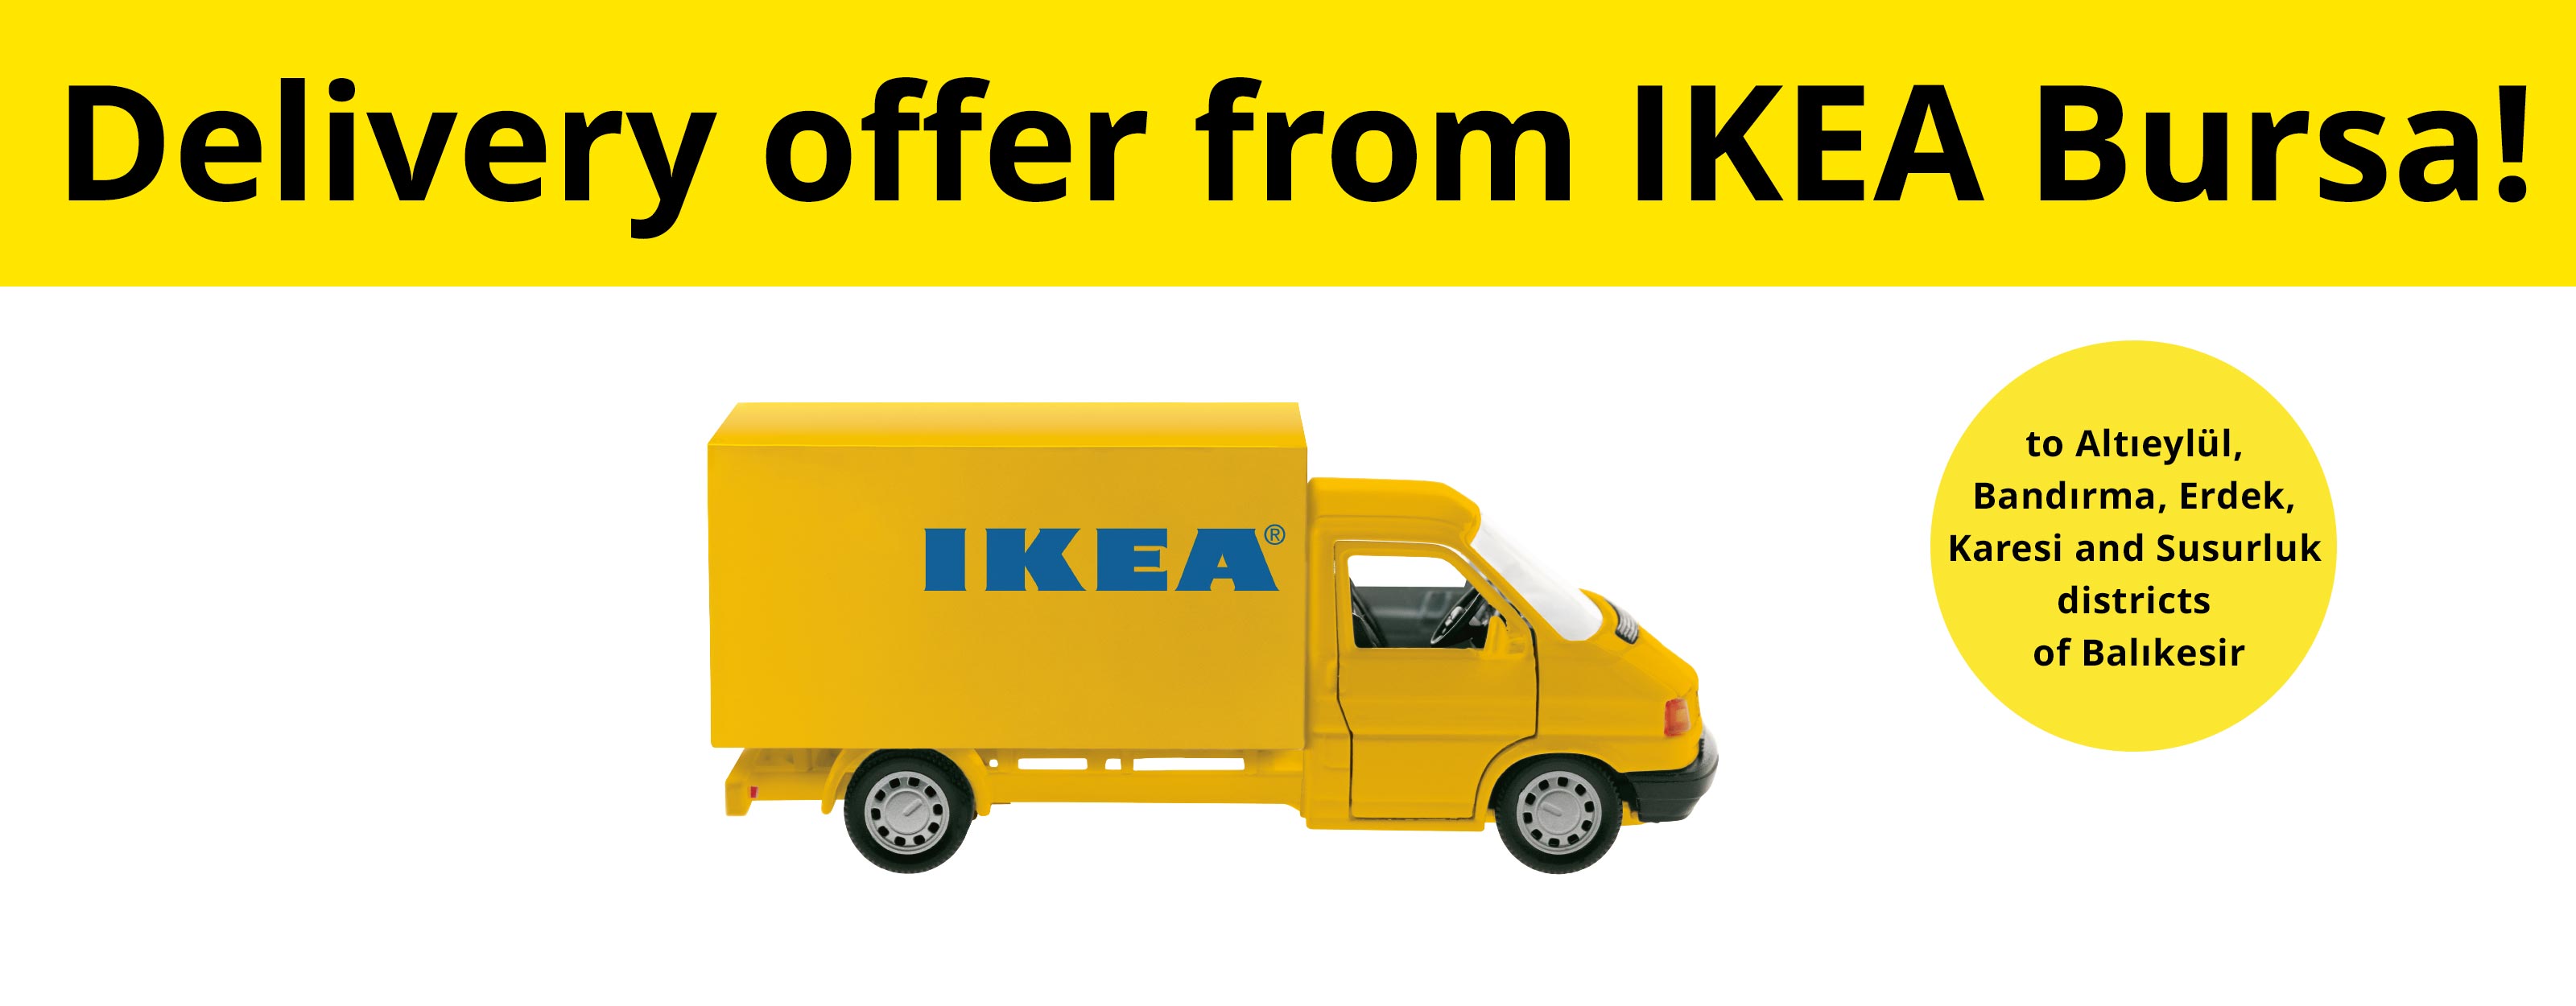 IKEA-ikea bursa balikesir nakliye kampanyasi agustos detay en